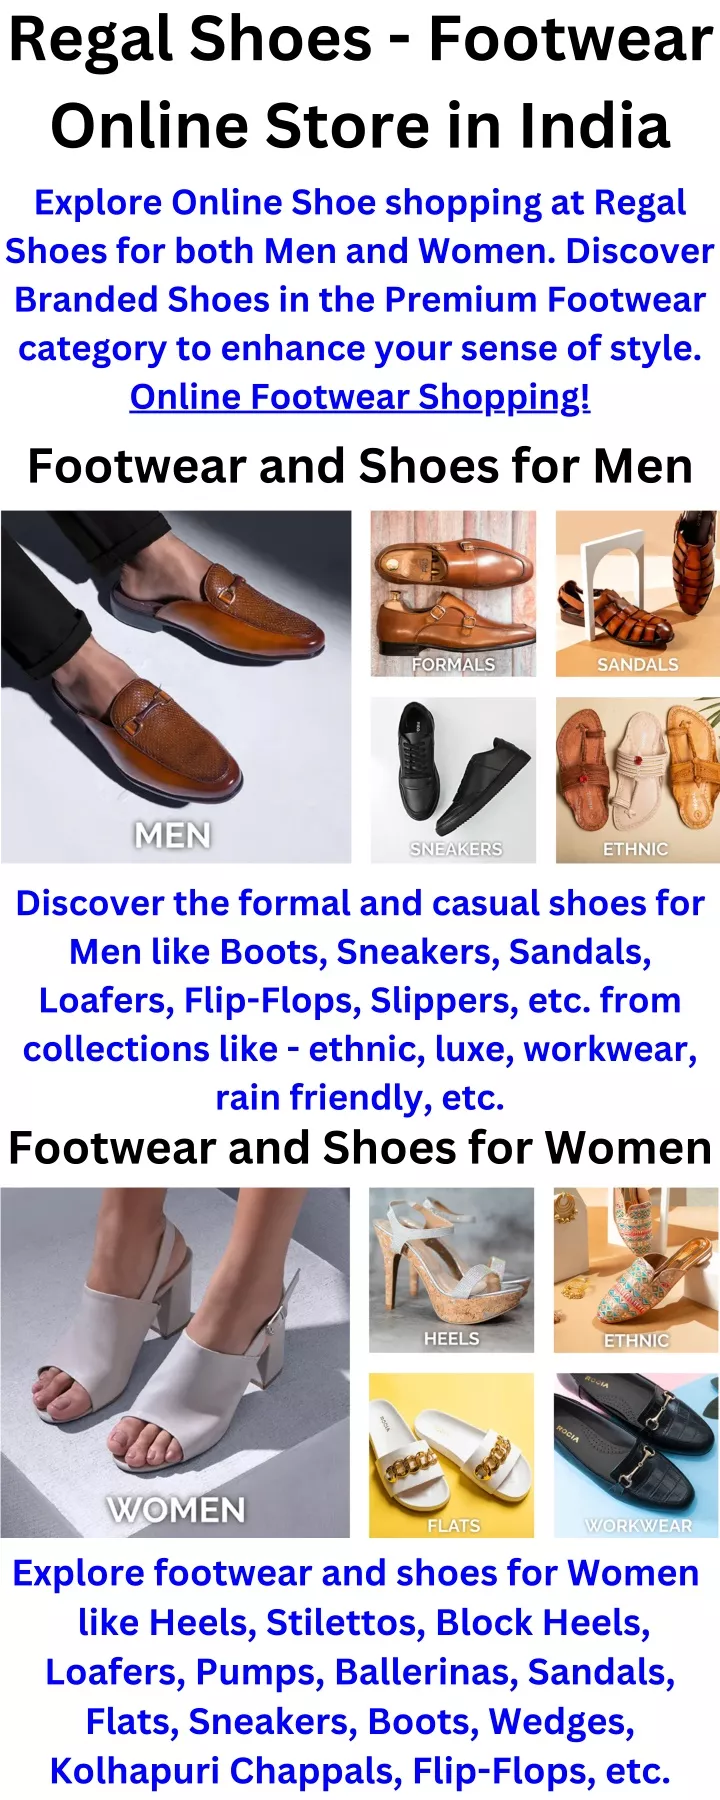 regal shoes footwear online store in india